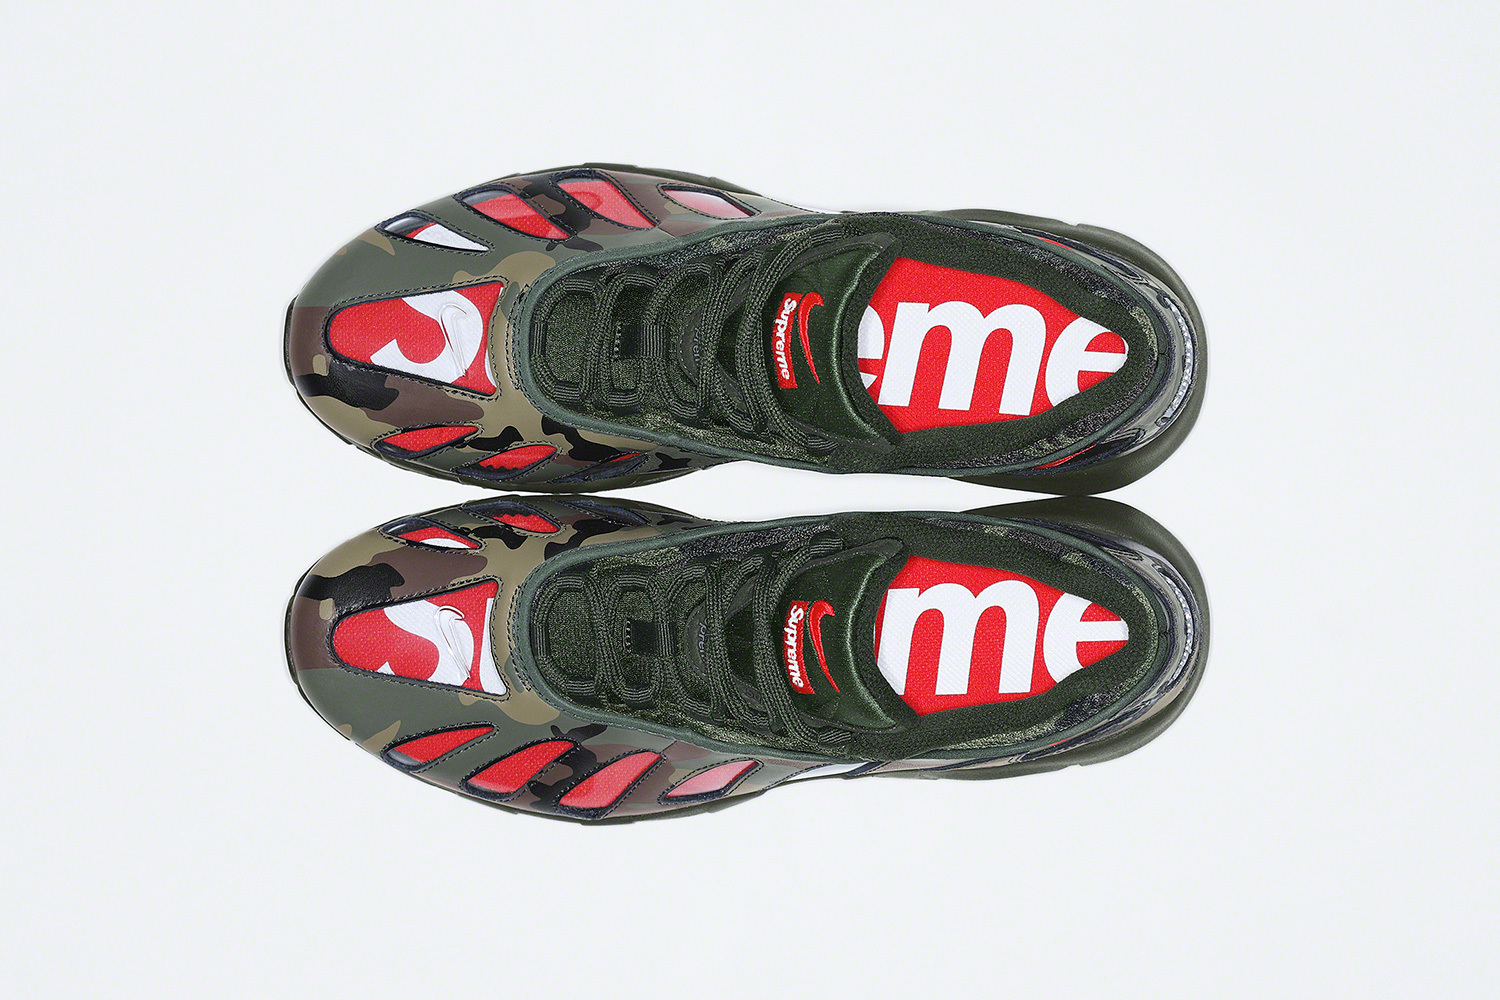 新聞分享/ 可透視鞋面Supreme x Nike Air Max 96 本週發售- KENLU.net